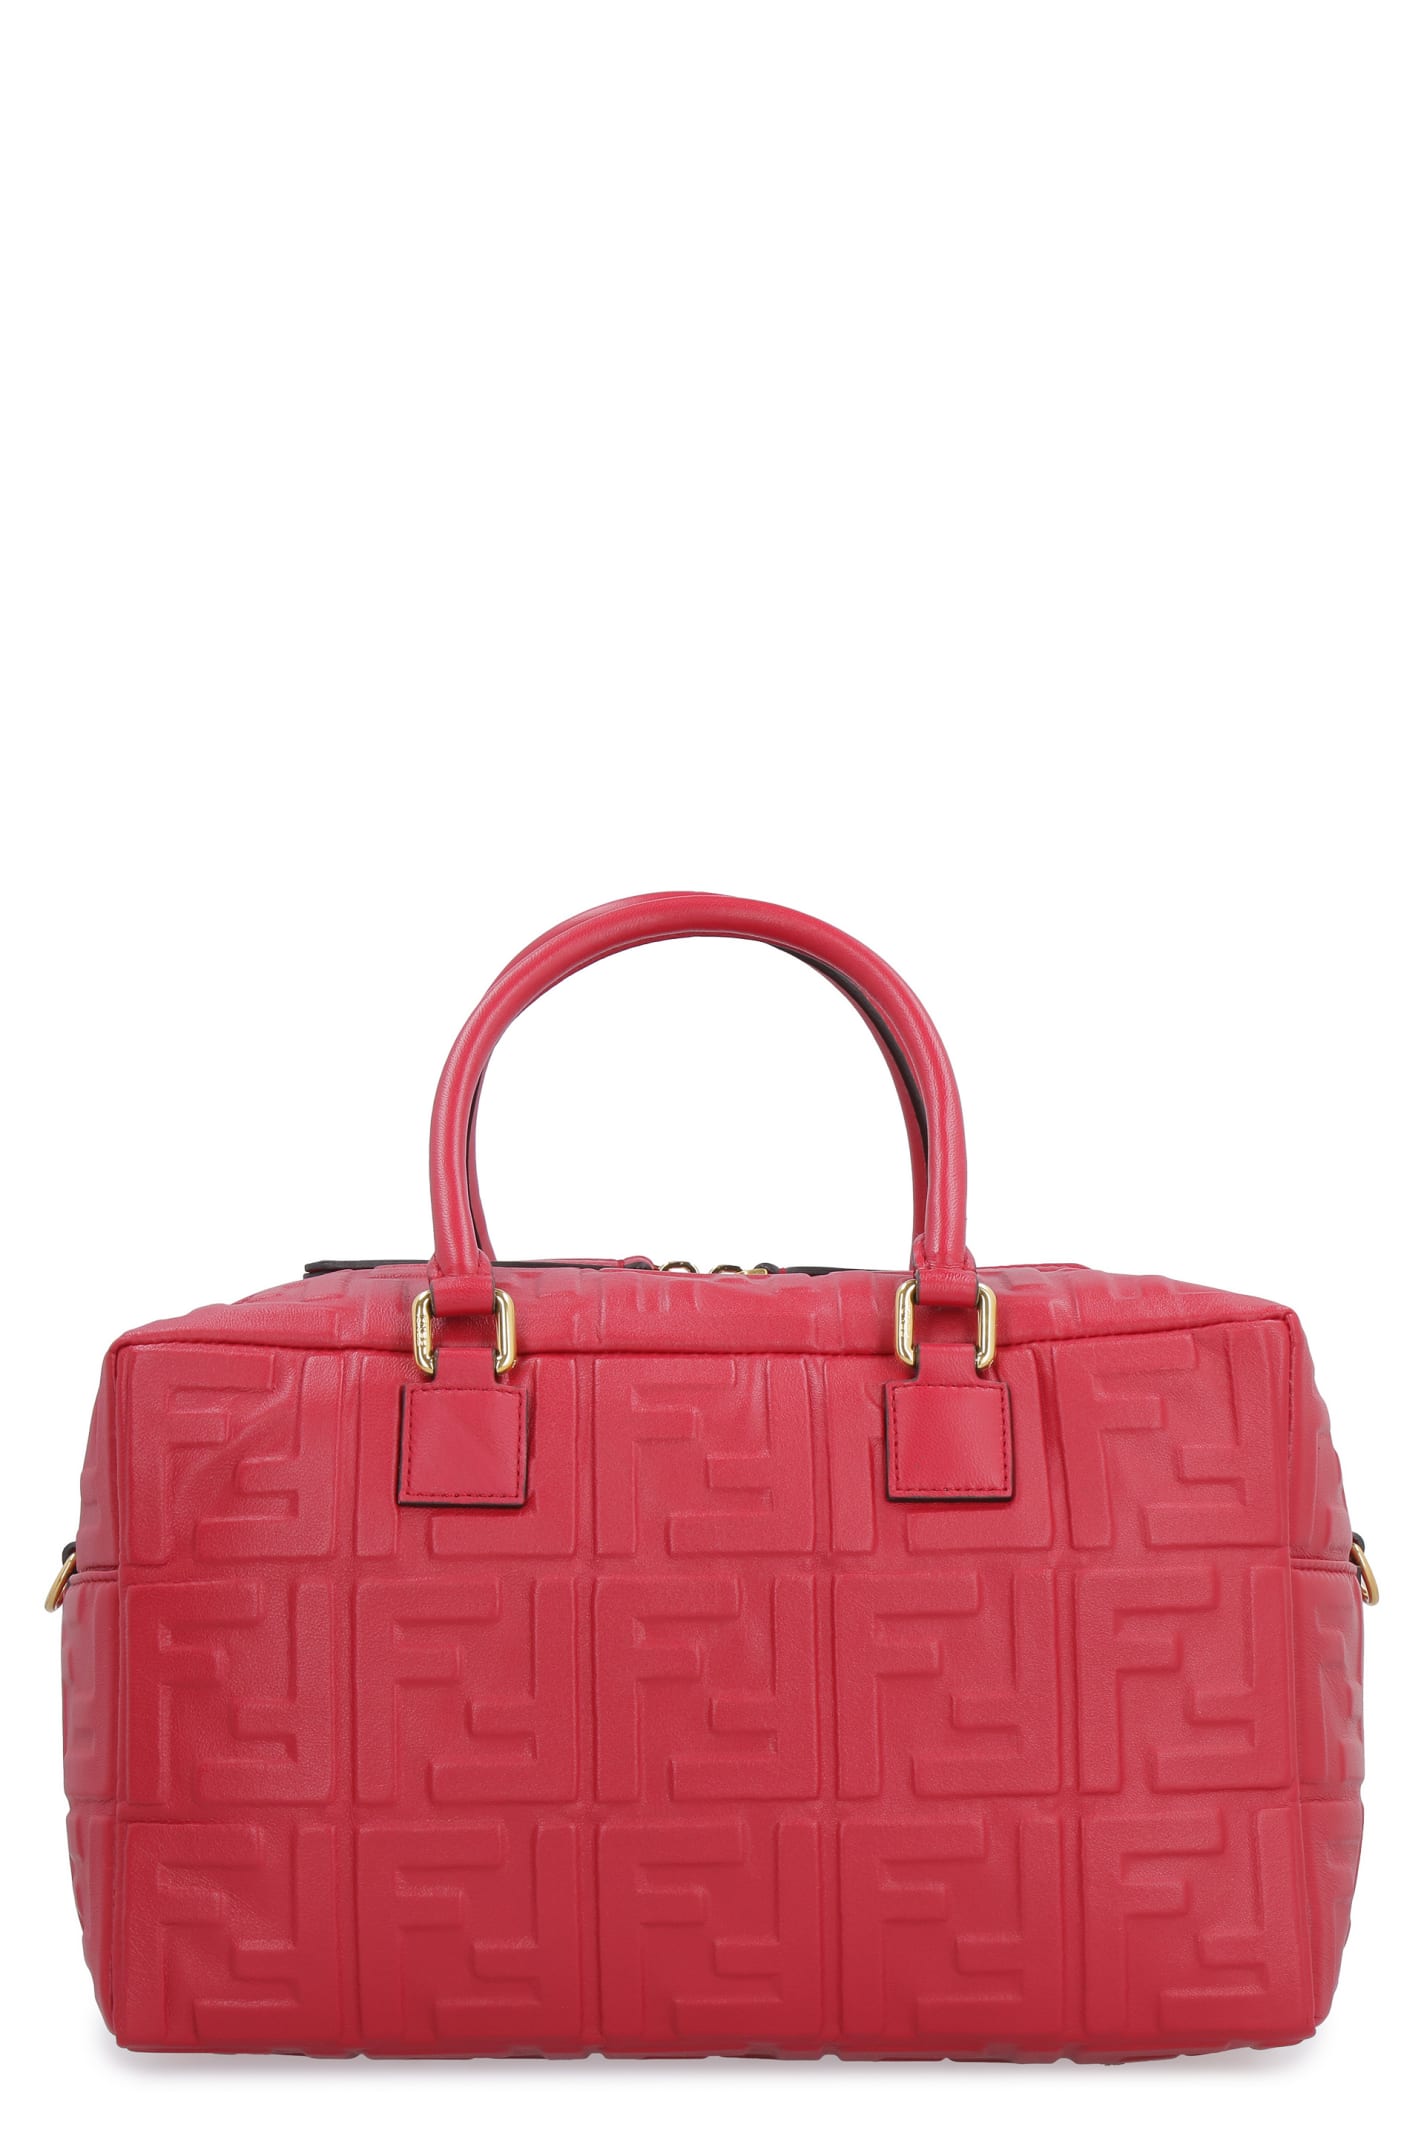 Fendi Boston Leather Handbag In Red